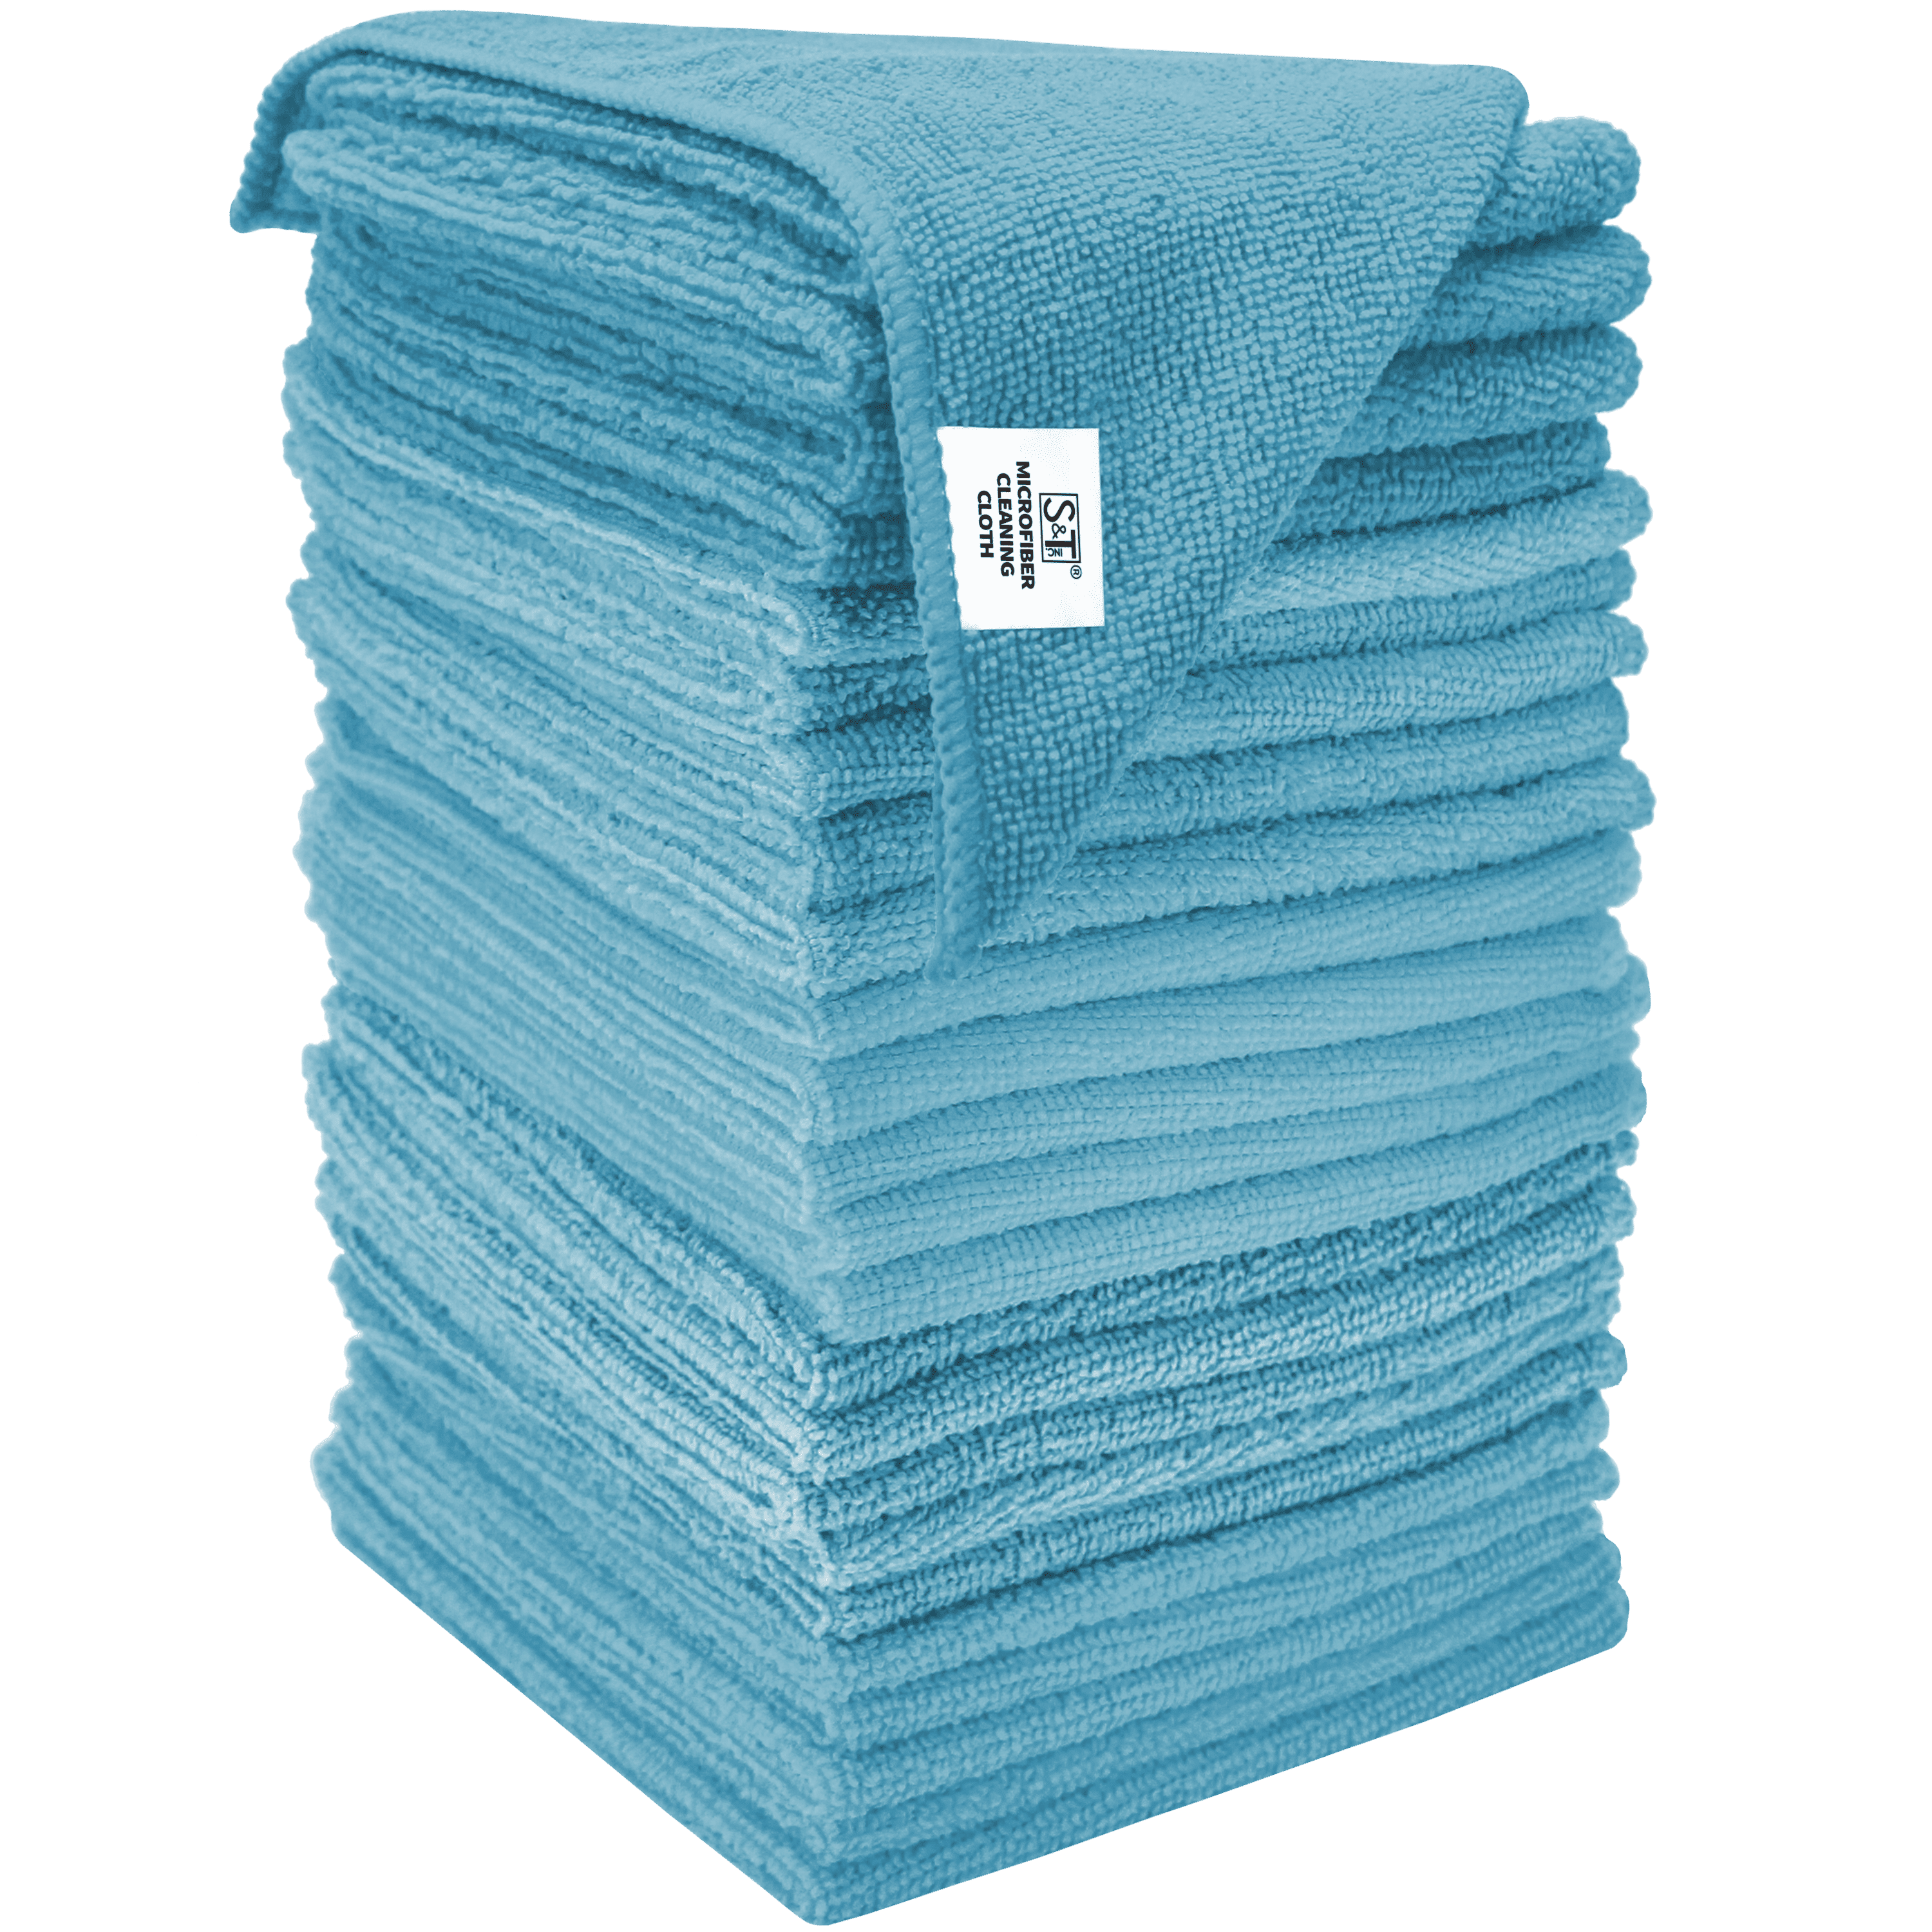 Microfiber Cleaning Cloths Towels Car Wash Detailing Salon Spa Hair Drying 